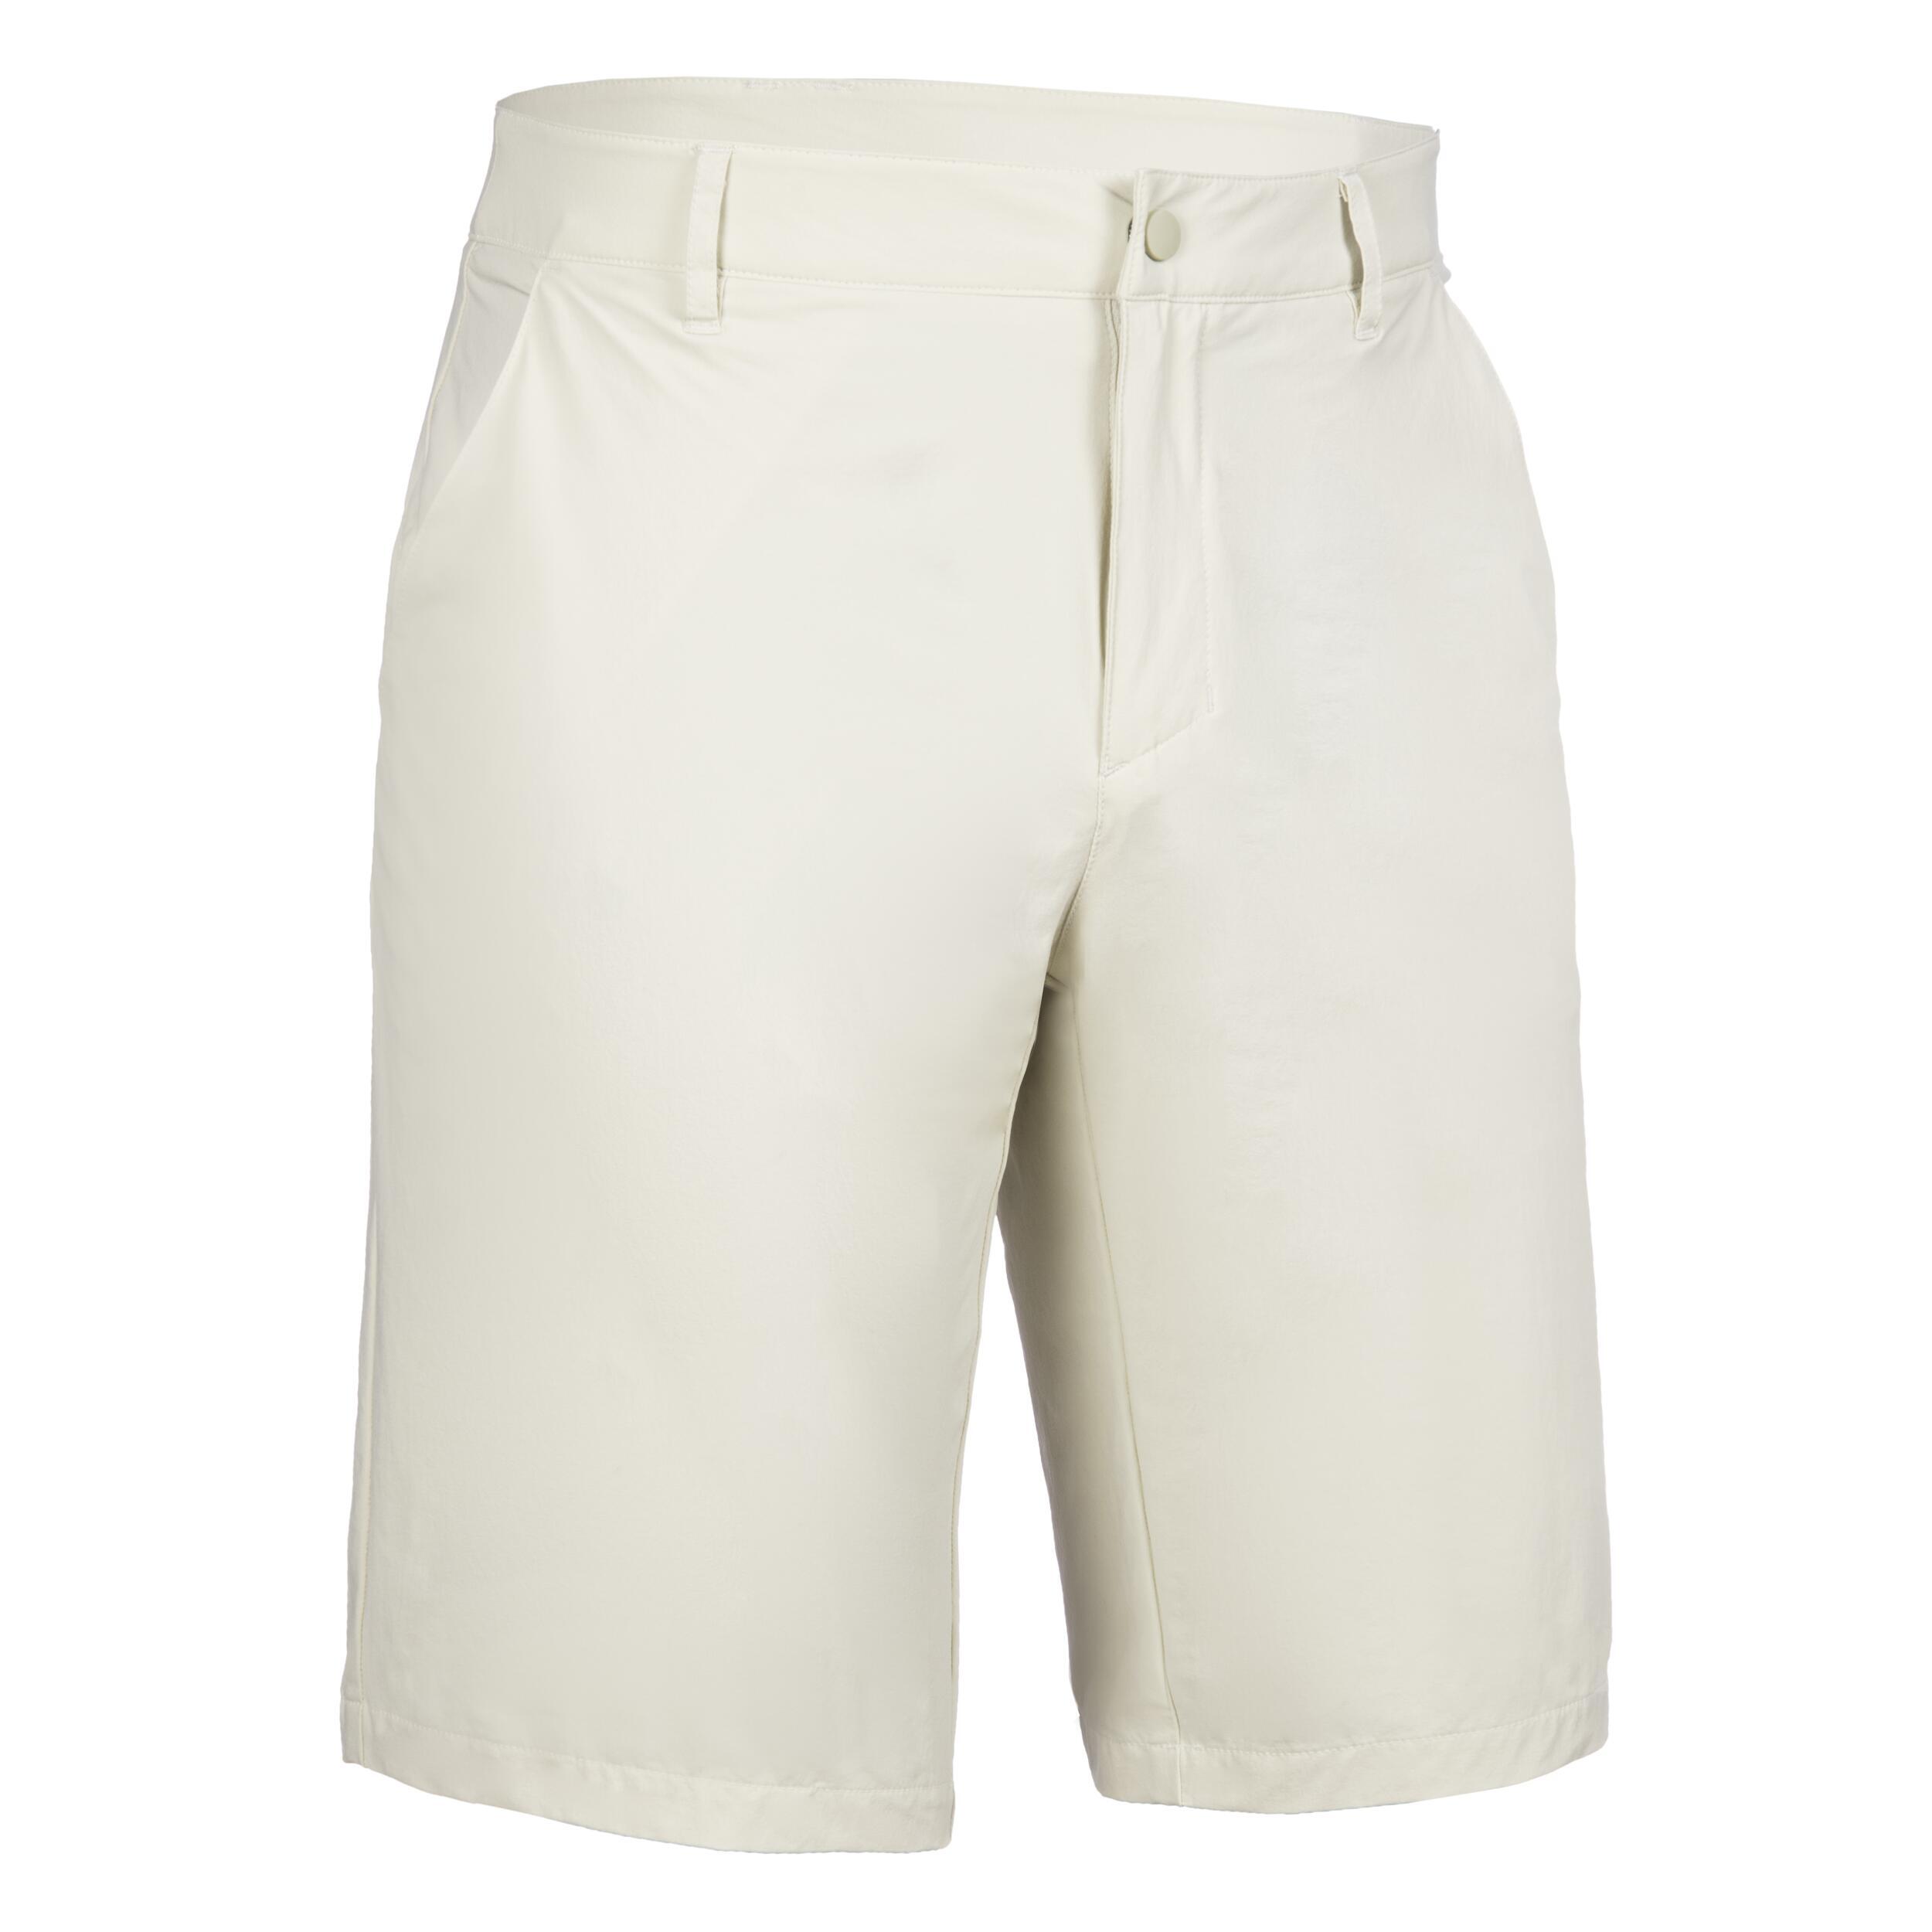 Men's golf shorts - WW500 beige 7/7